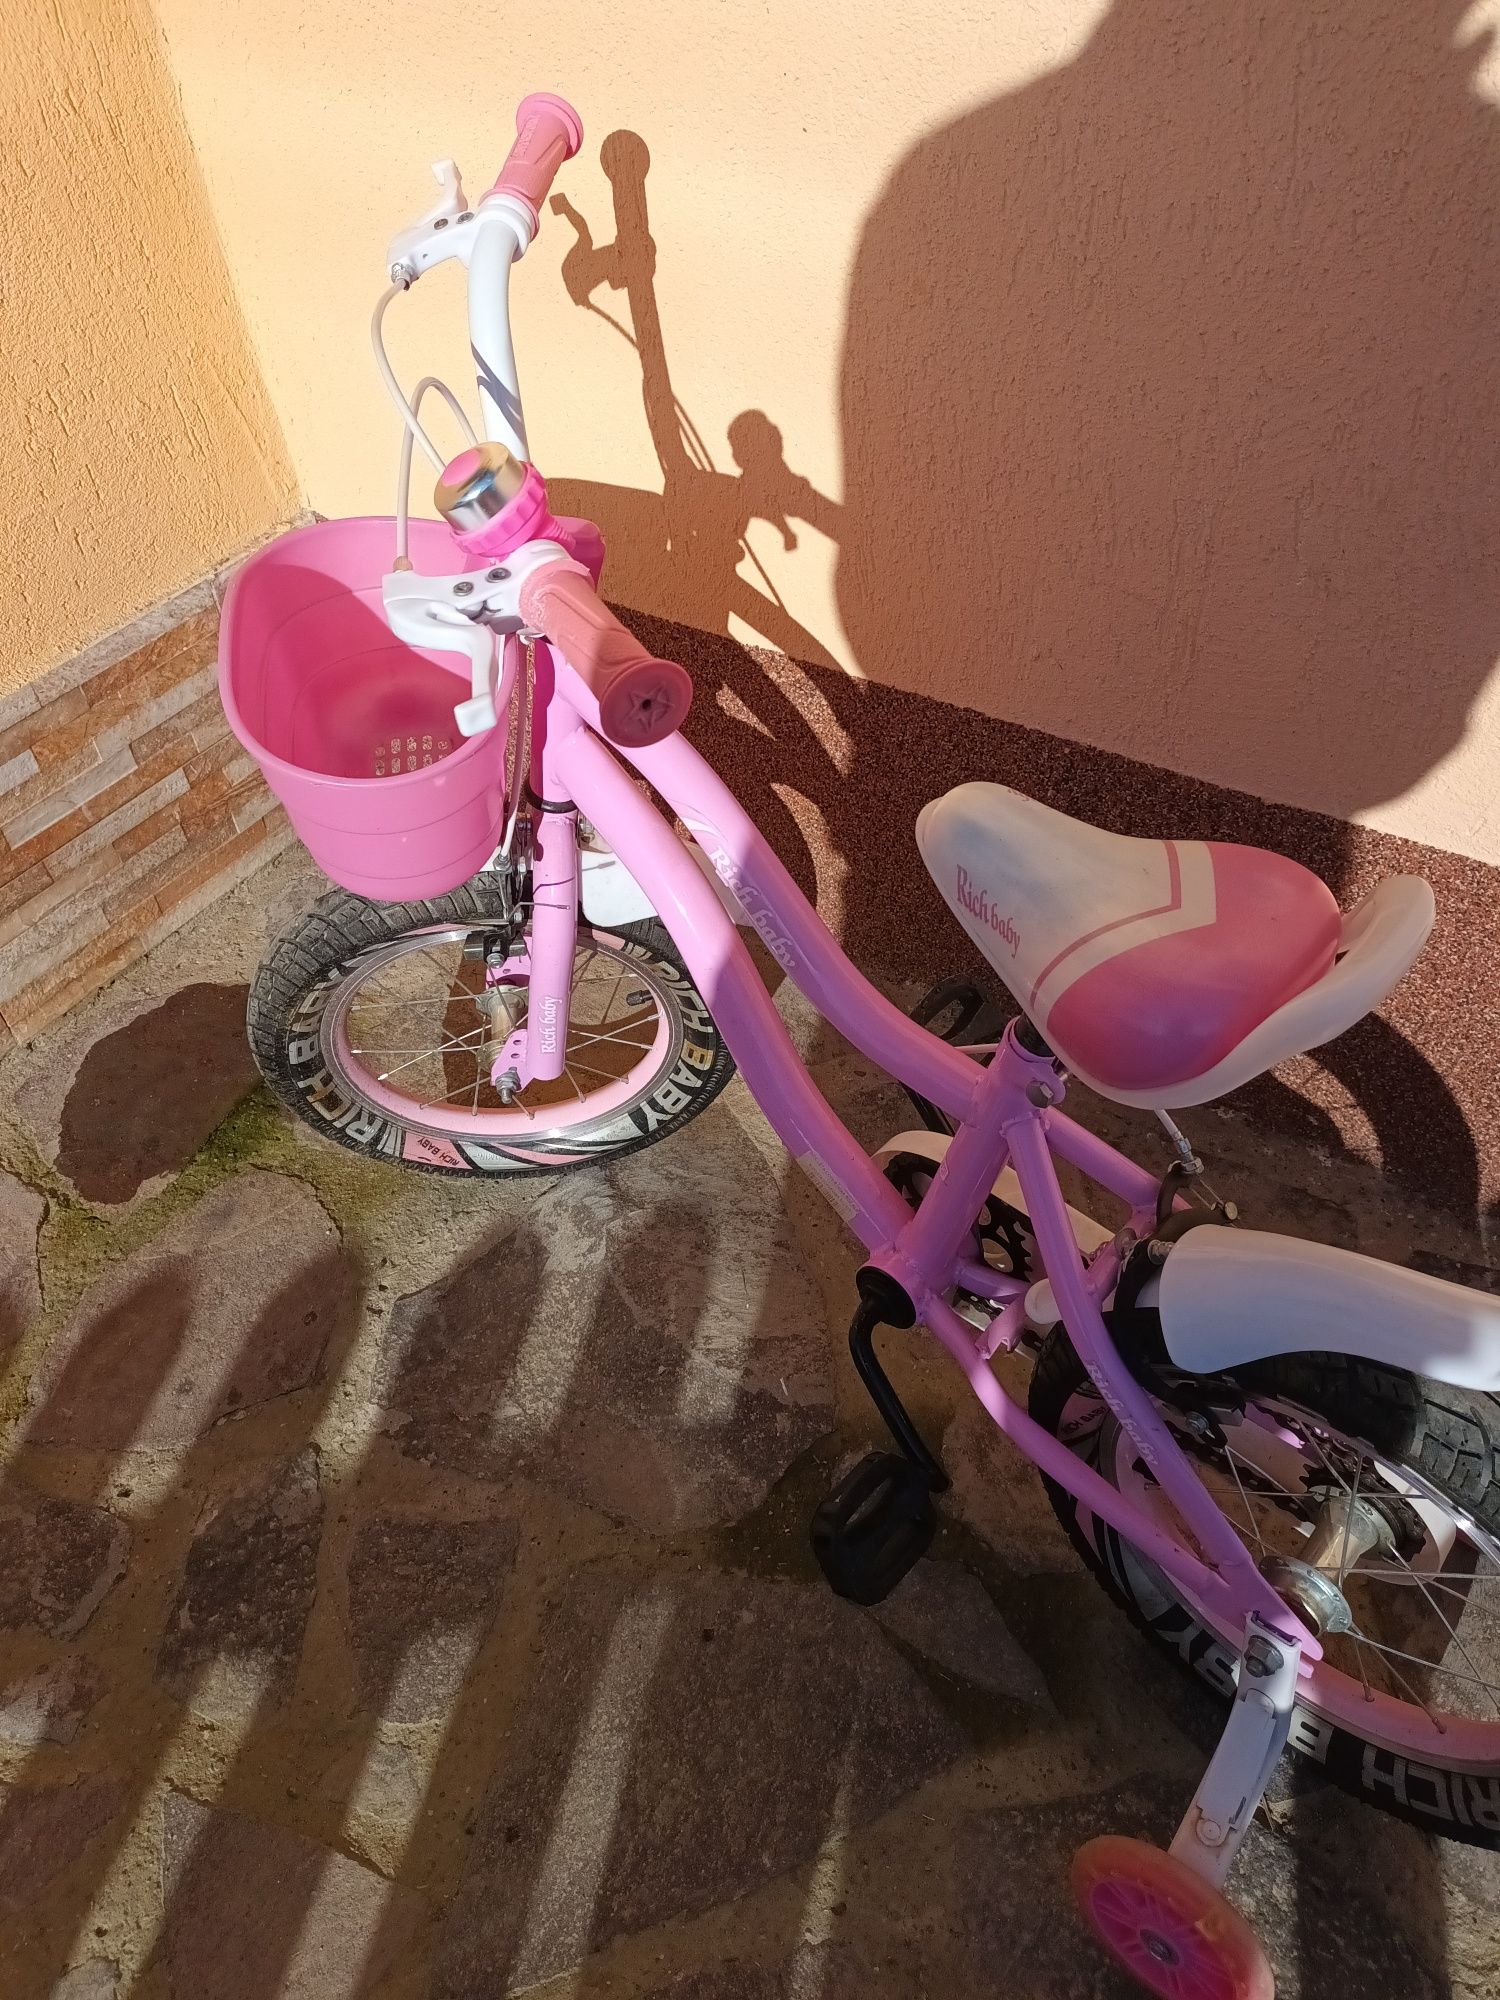 Bicicleta Rich-Baby